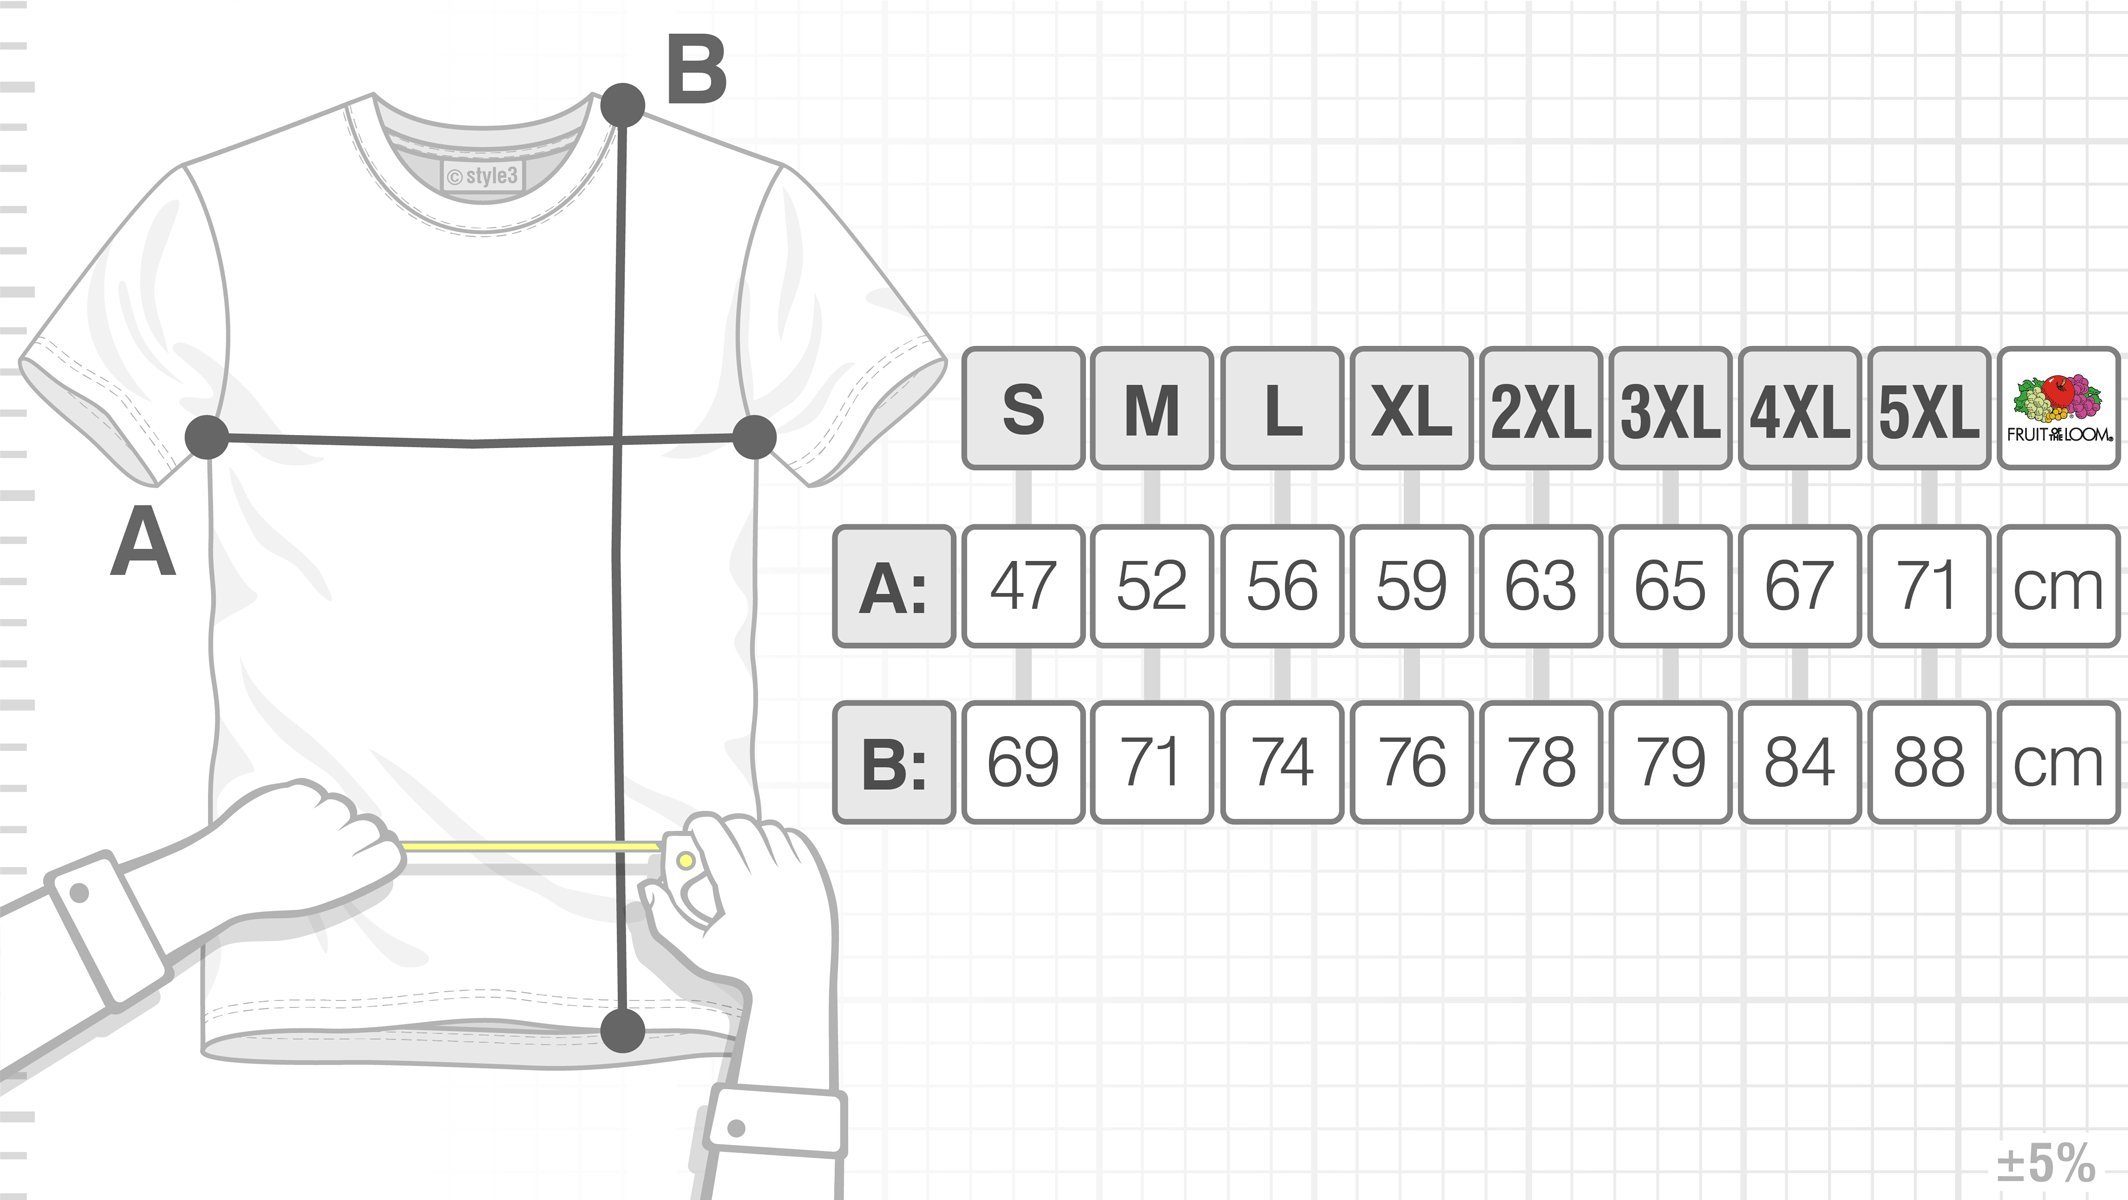 poke Instinct poeball gelb instinkt Print-Shirt intuition Team boy game Herren T-Shirt style3 arena